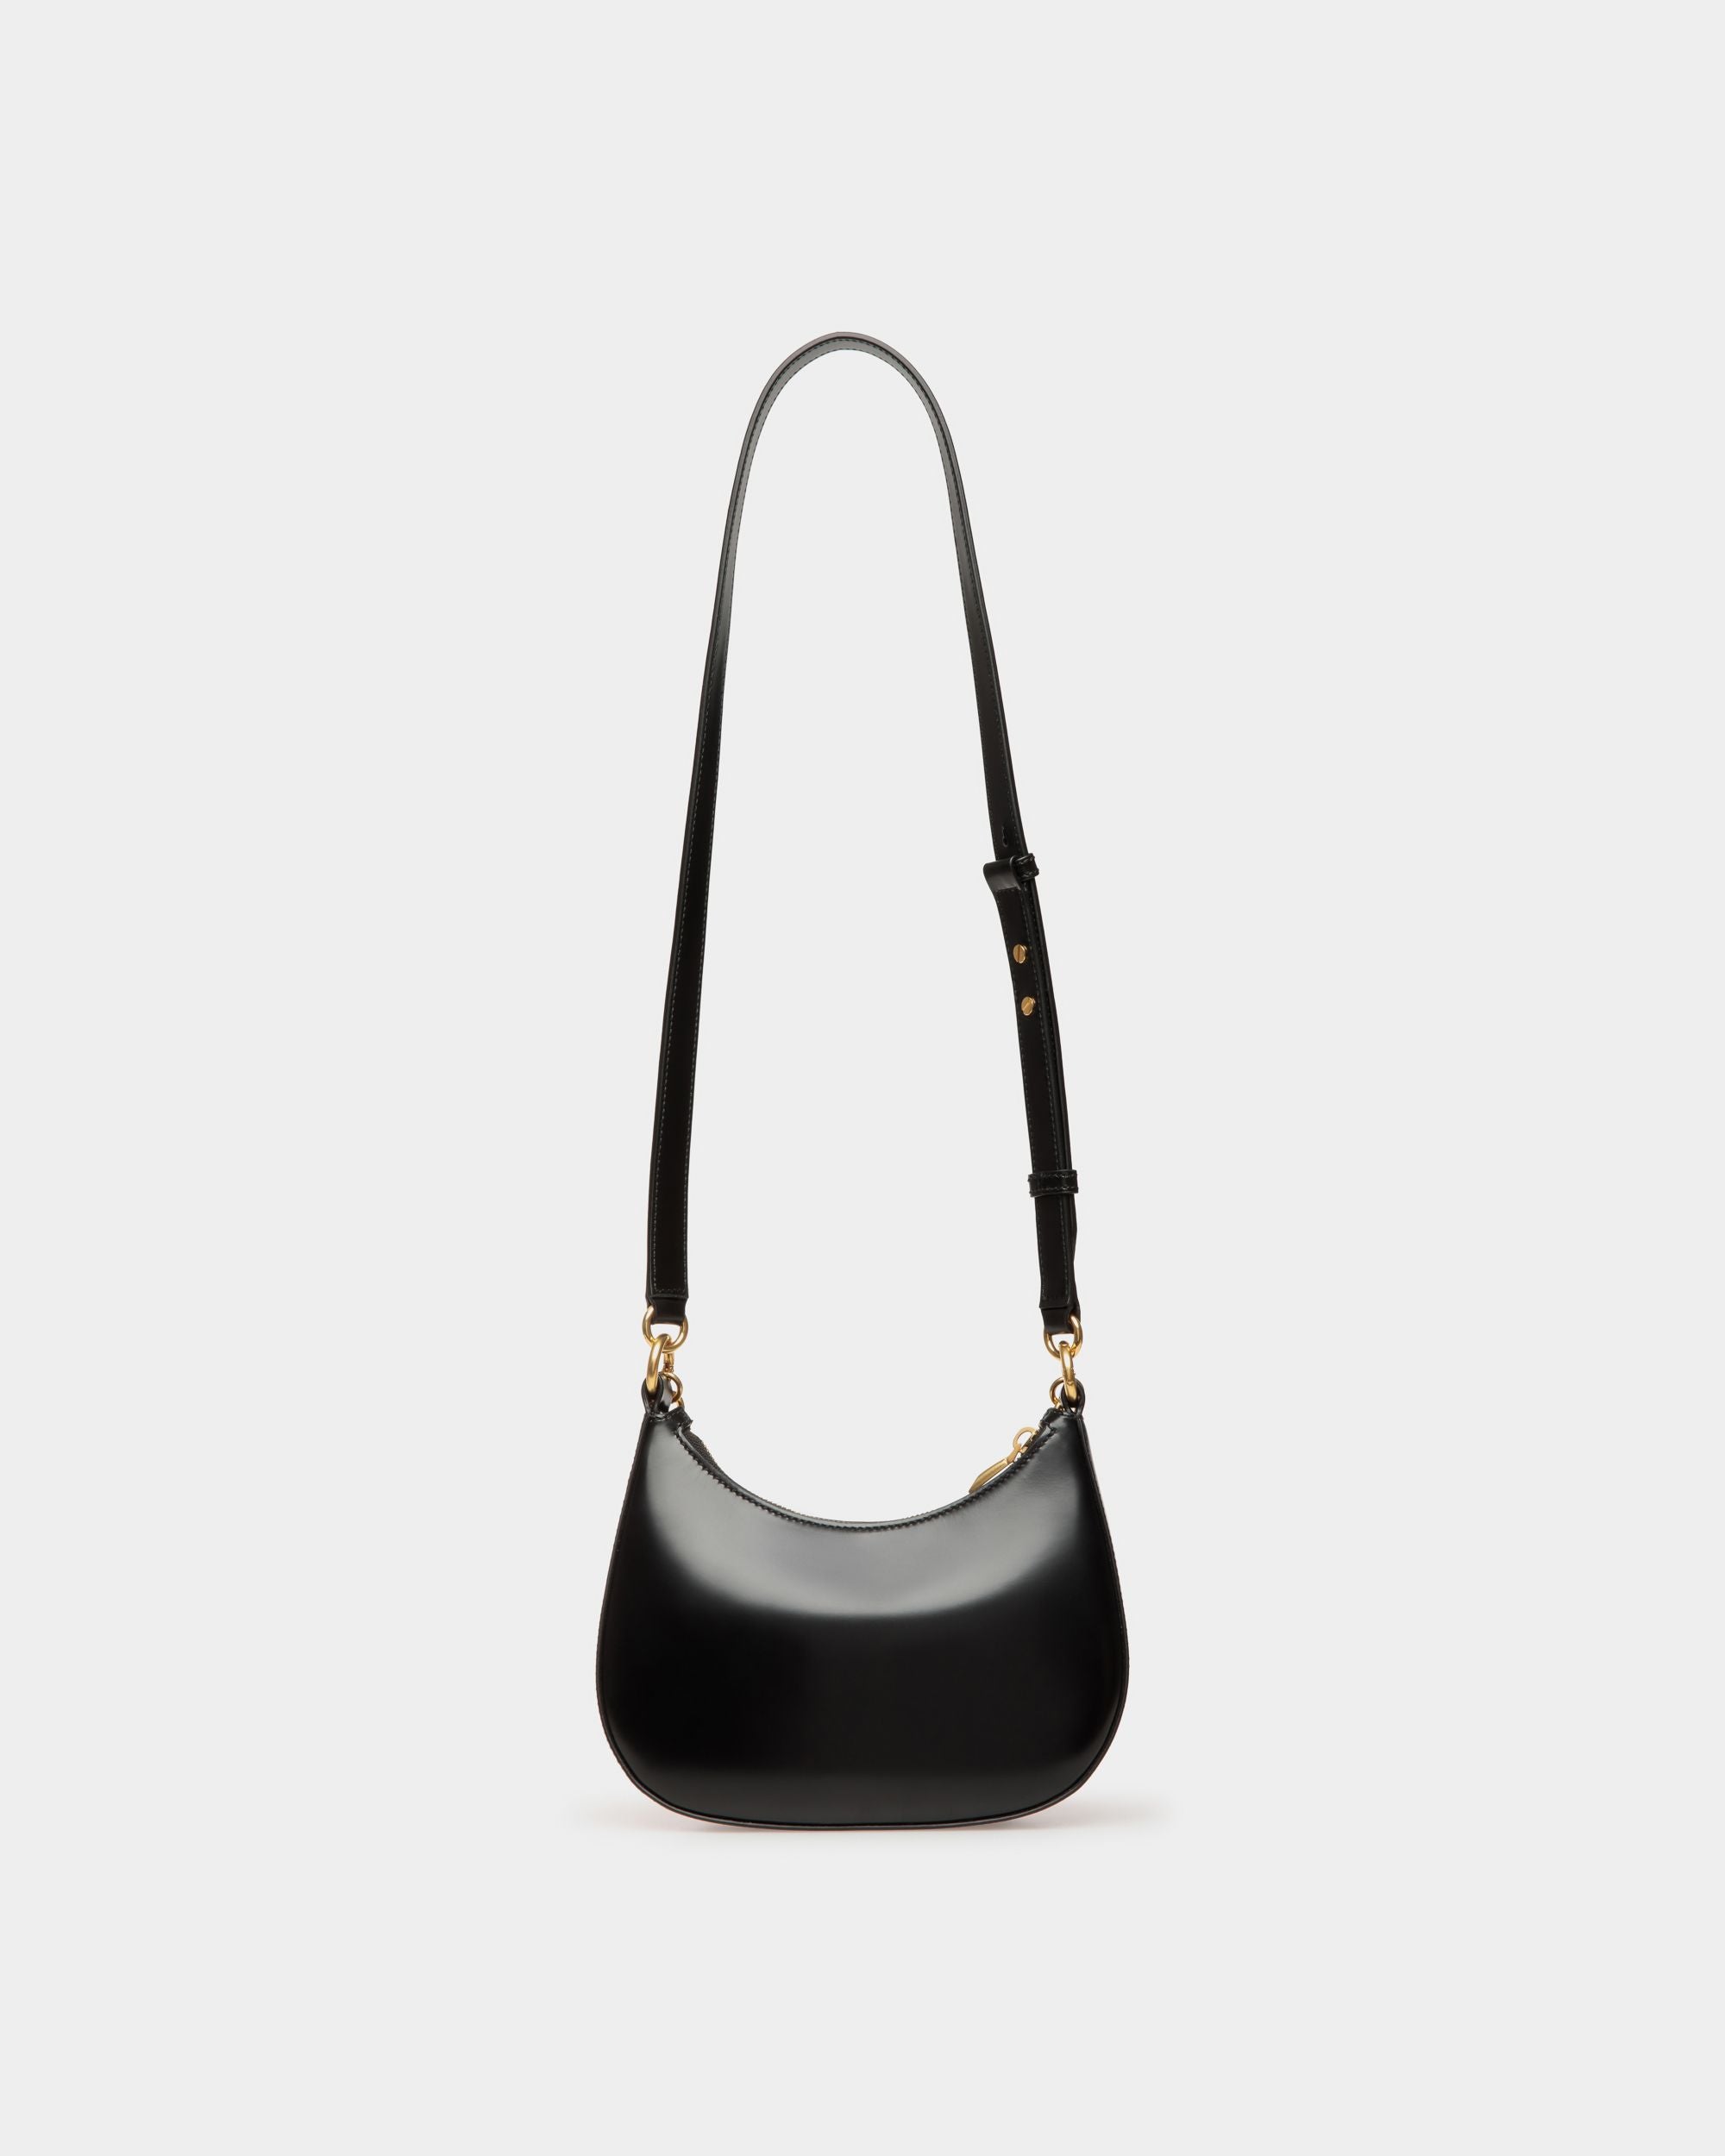 Emblem | Women's Mini Crossbody Bag in Black Brushed Leather | Bally | Still Life Back